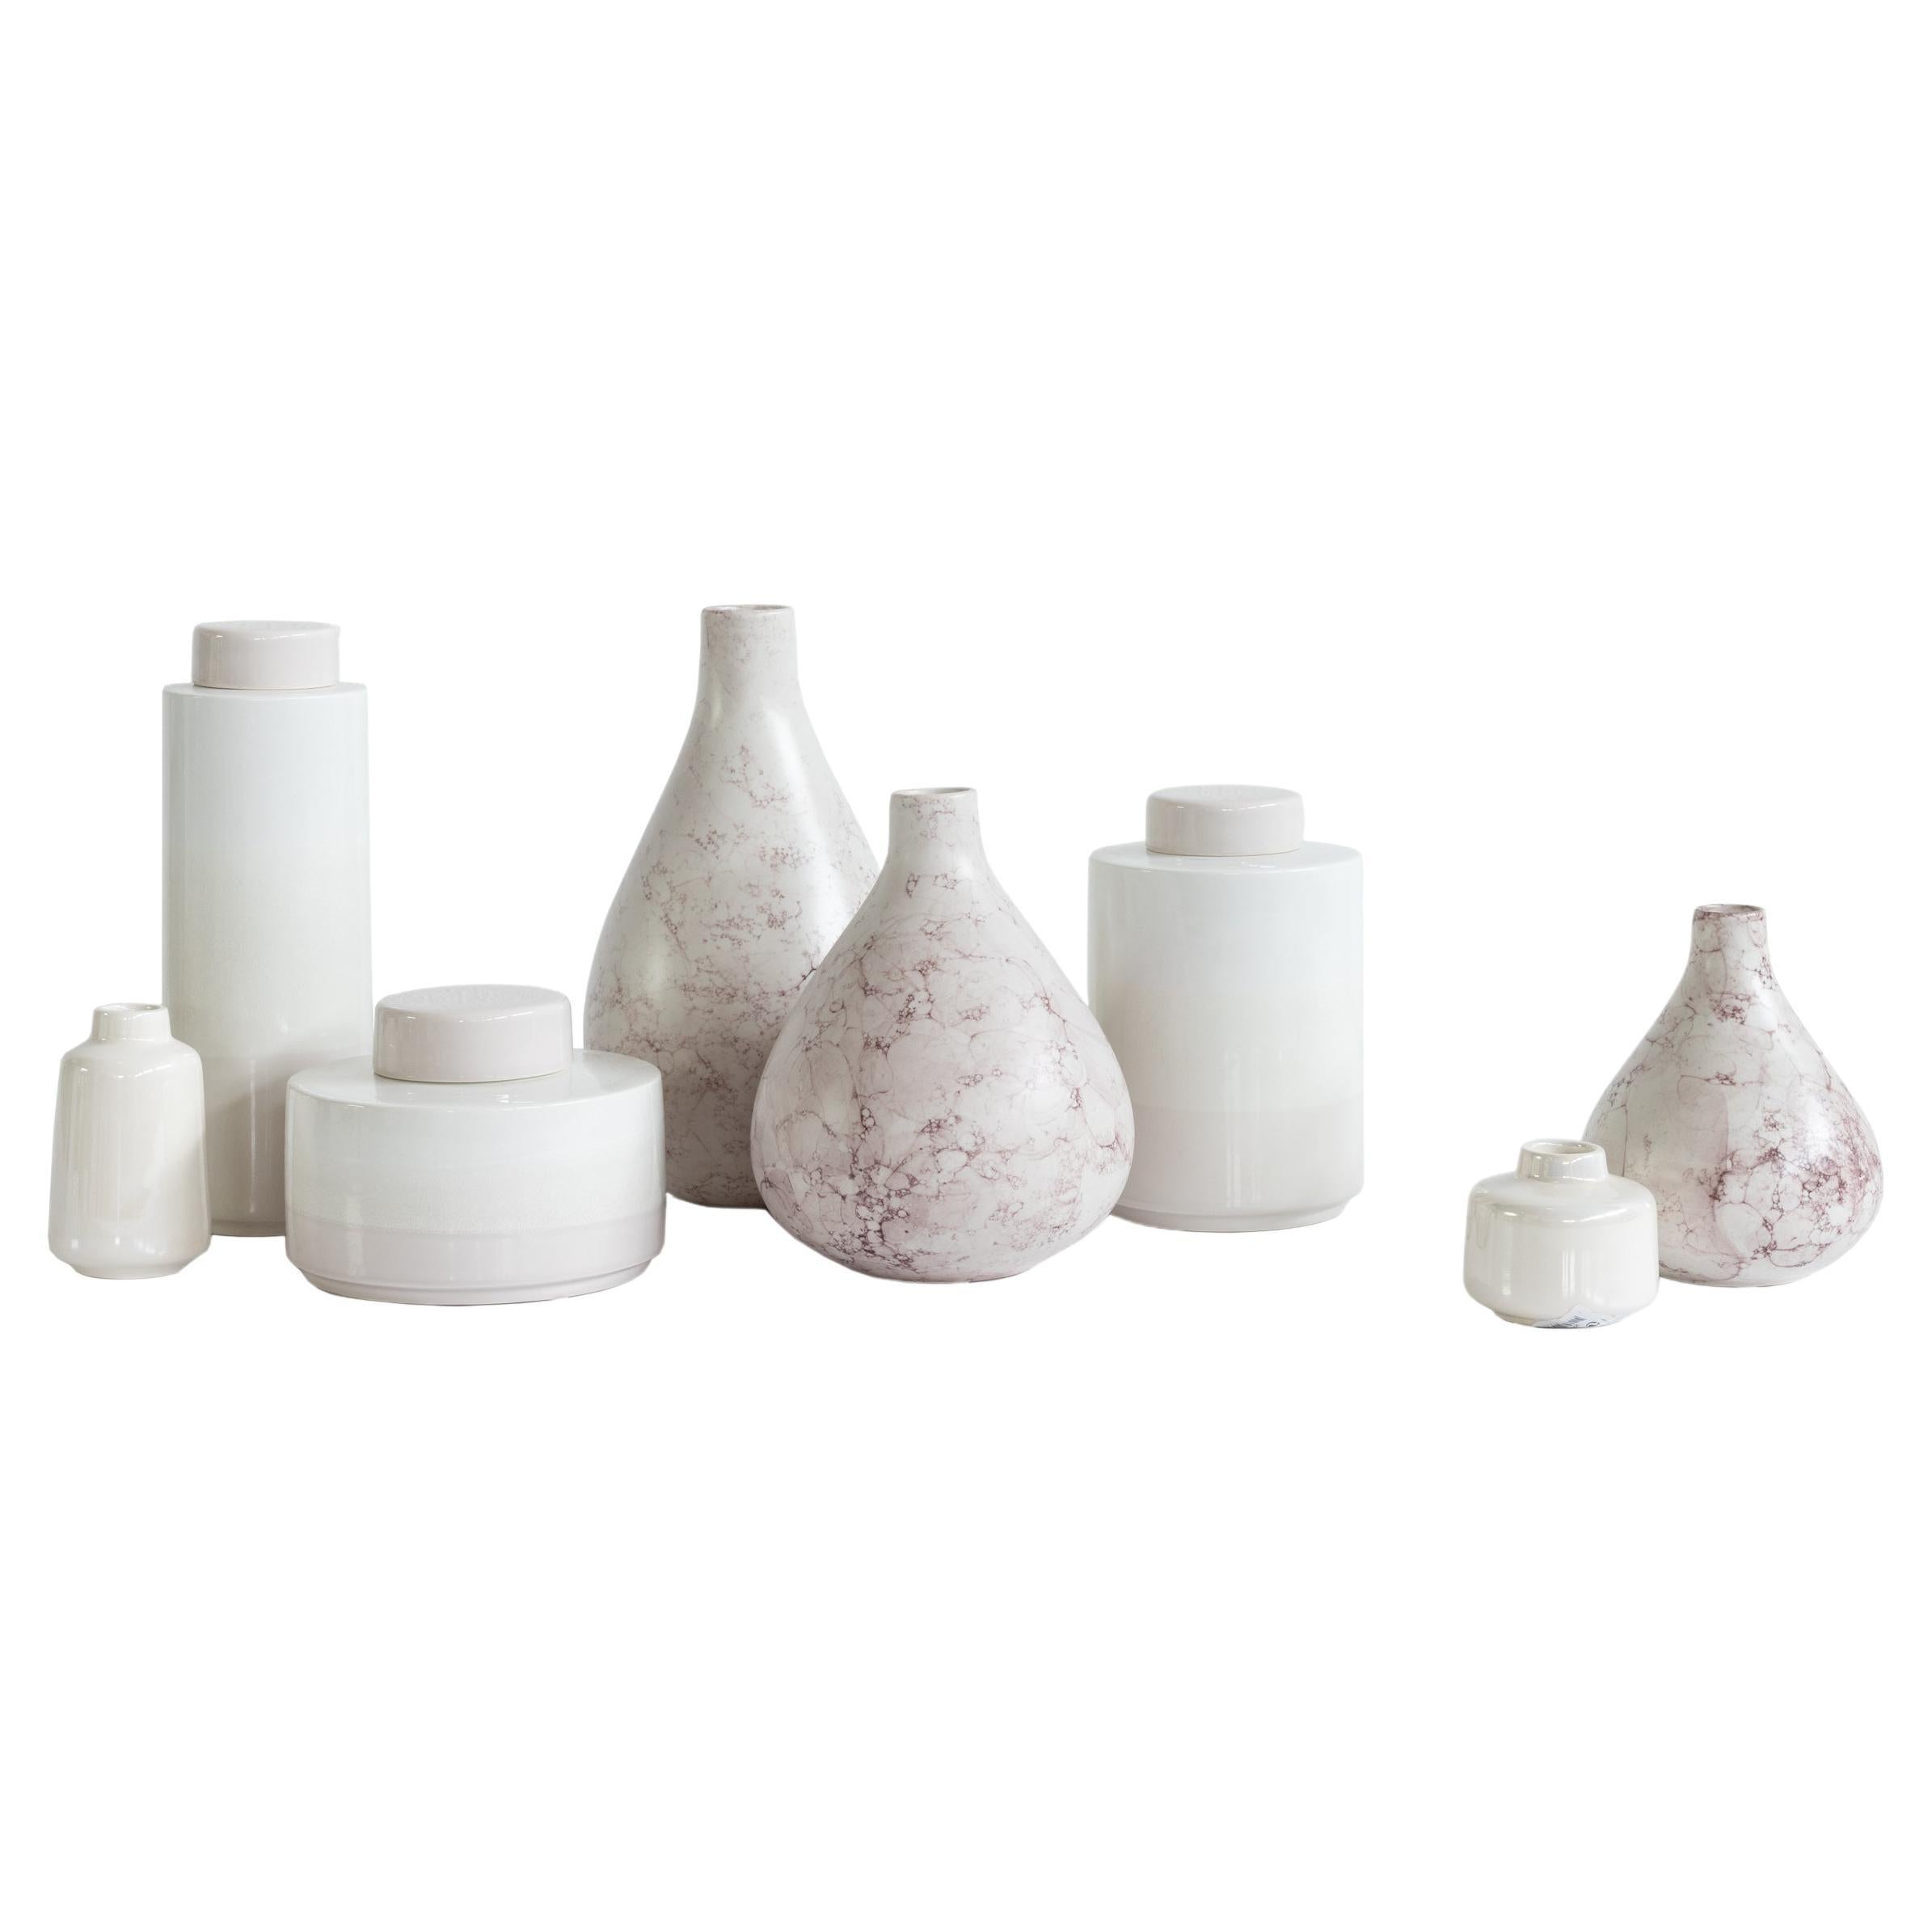 Set/8 Ceramic Jars & Pots, White & Pink, Handmade in Portugal by Lusitanus Home